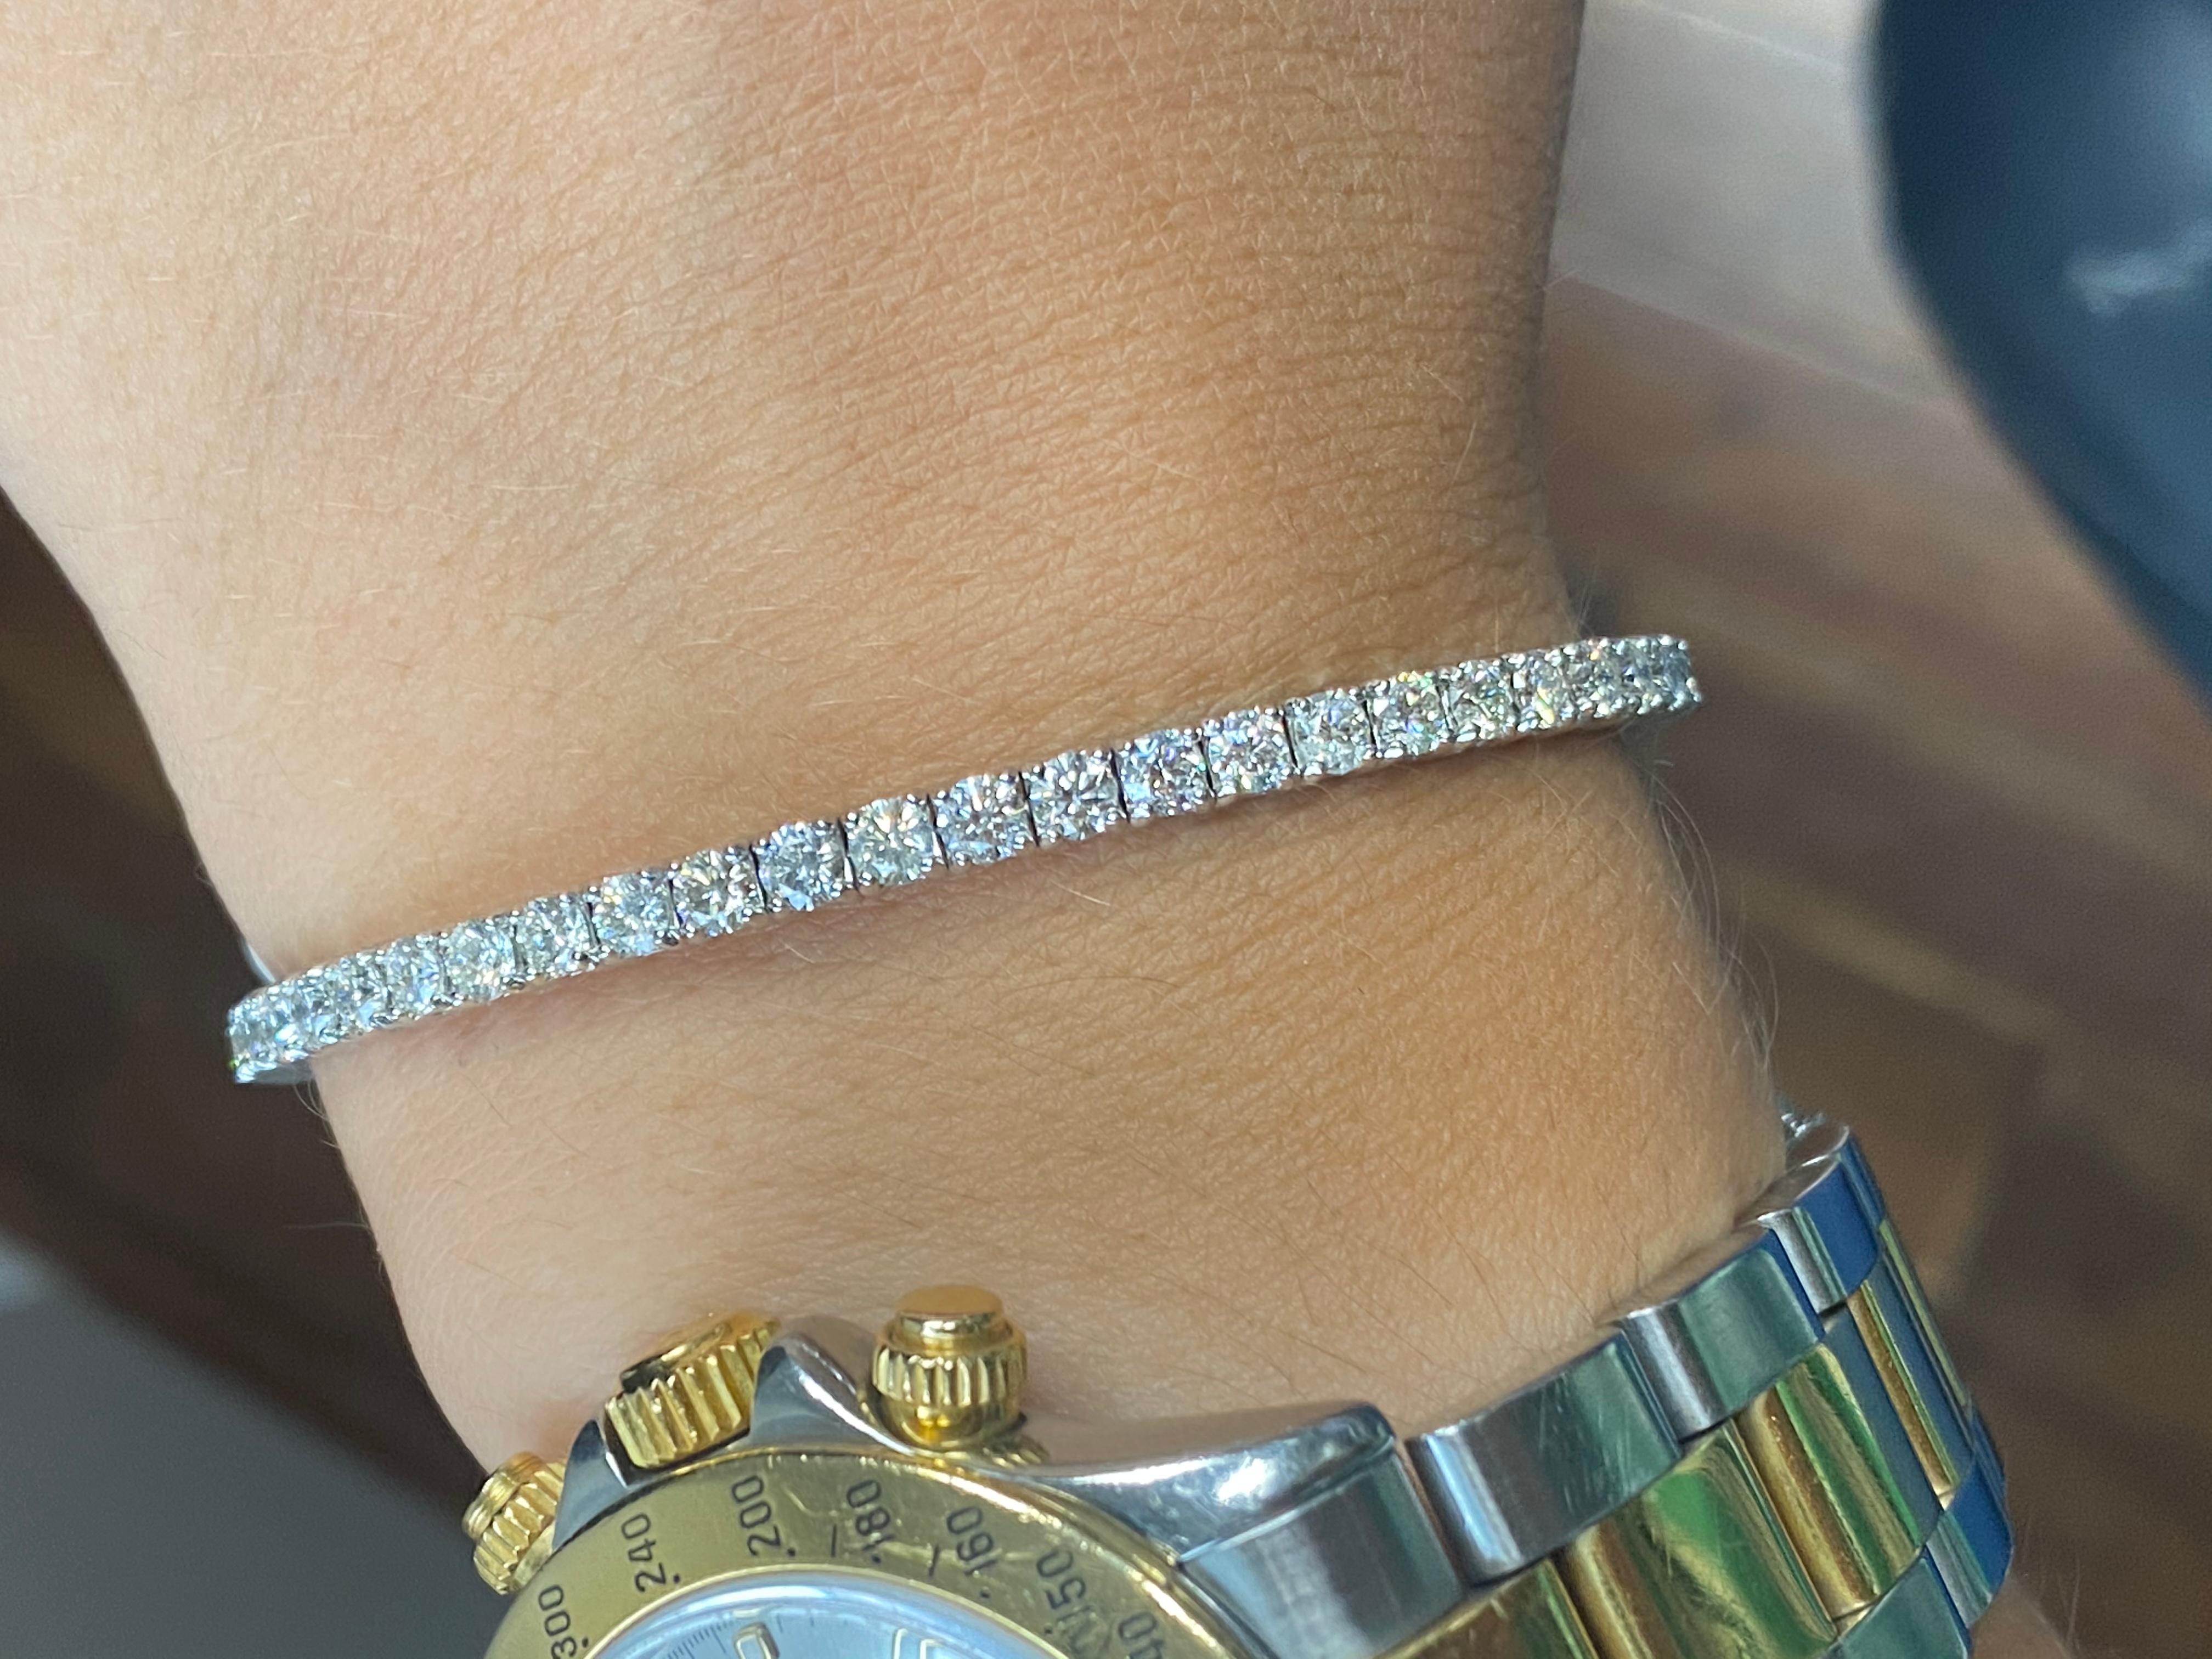 flexible diamond bangle bracelet